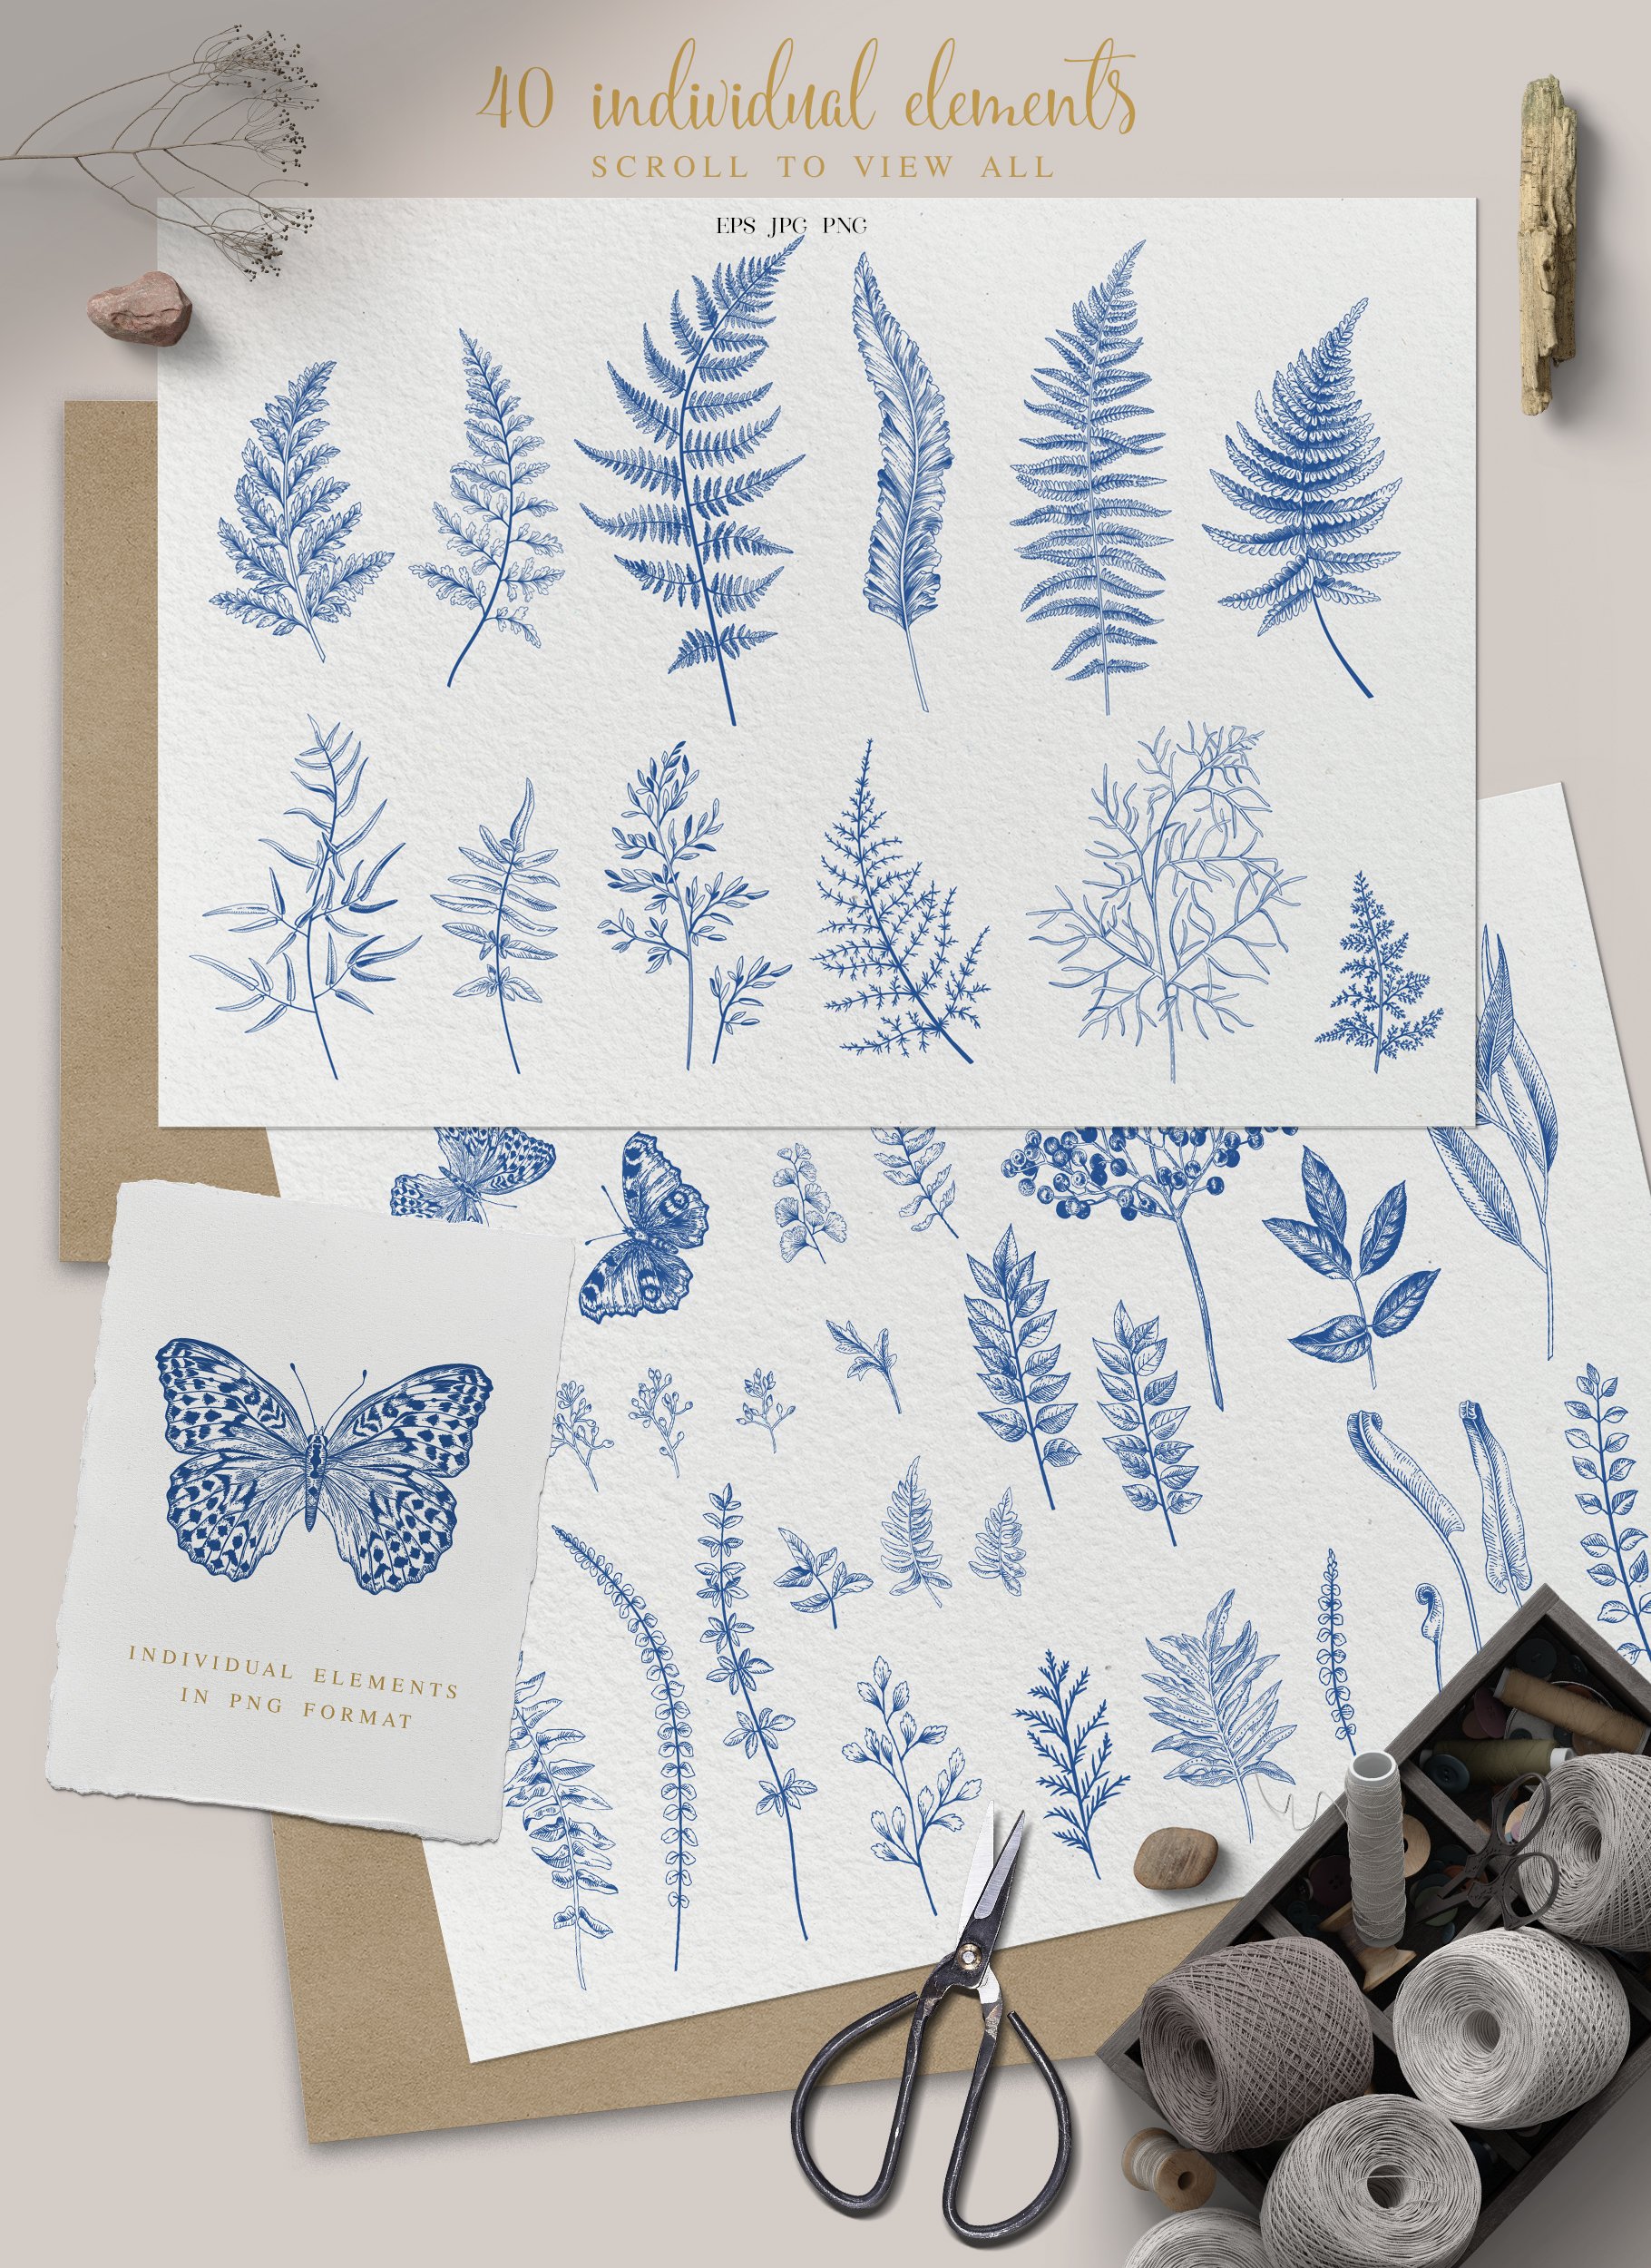 Blue Floral. Botanical Collection.